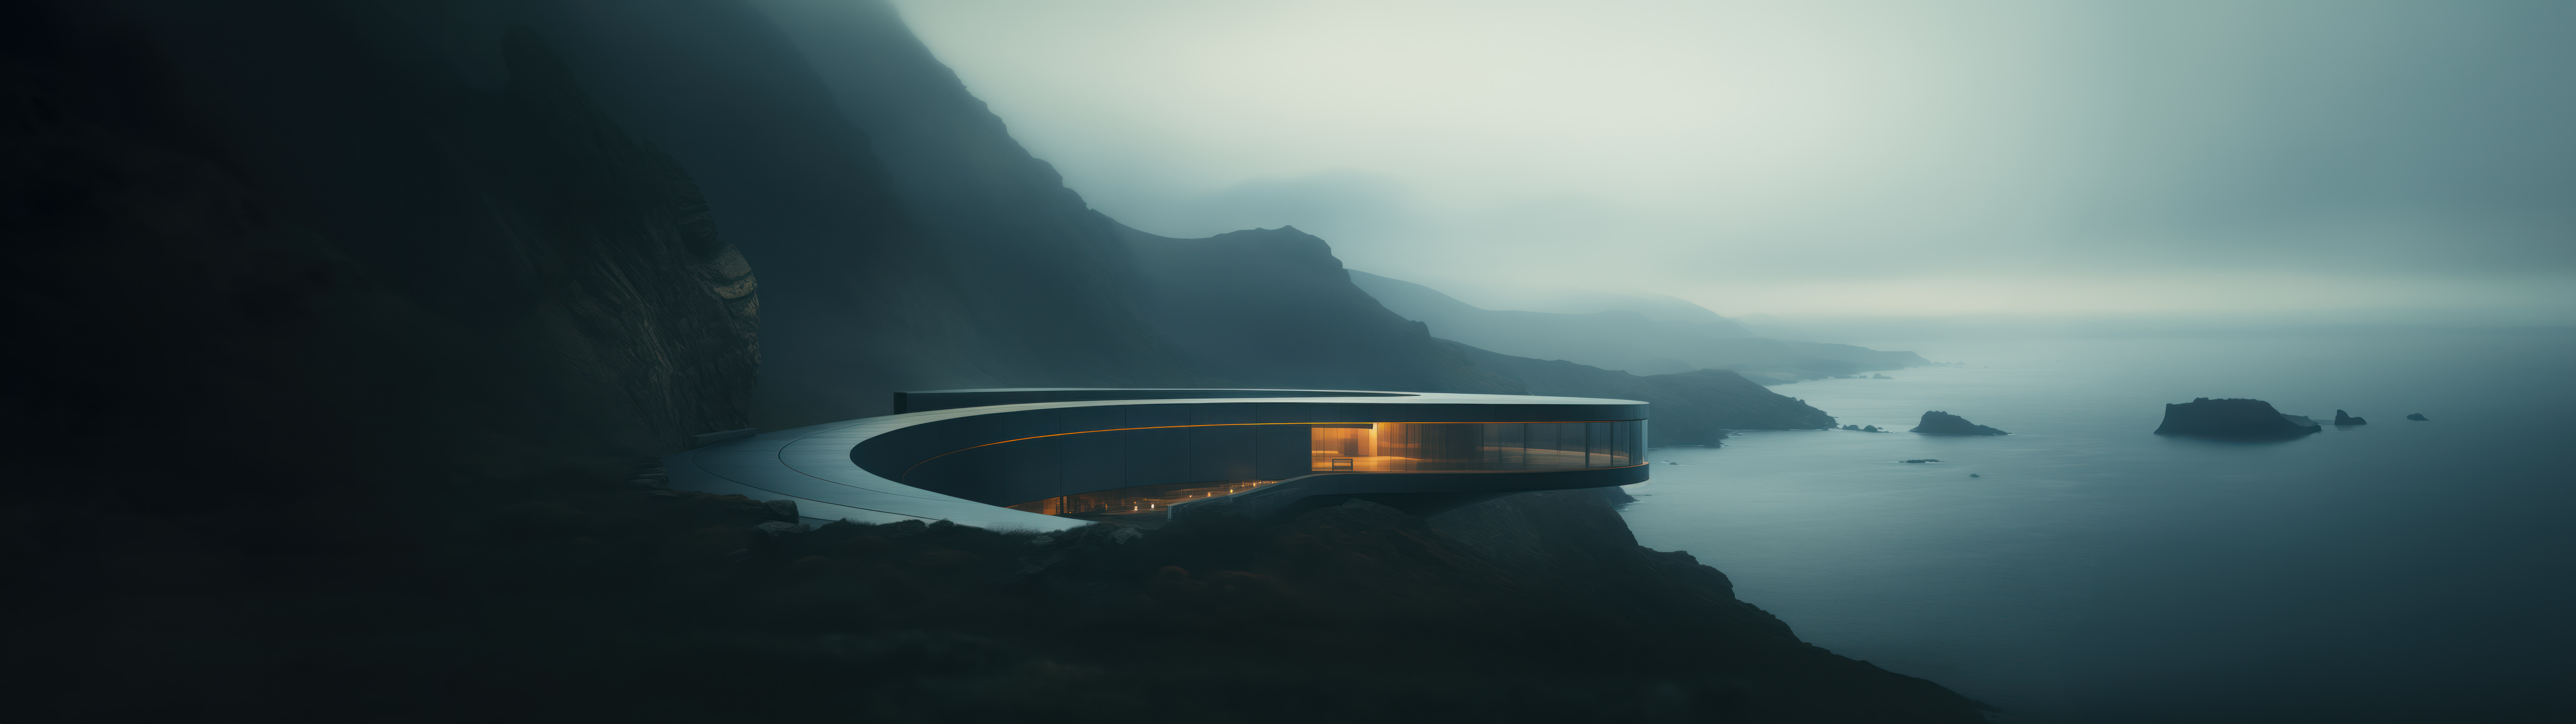 General 9718x2733 ultrawide architecture landscape AI art water house mist sea mountains